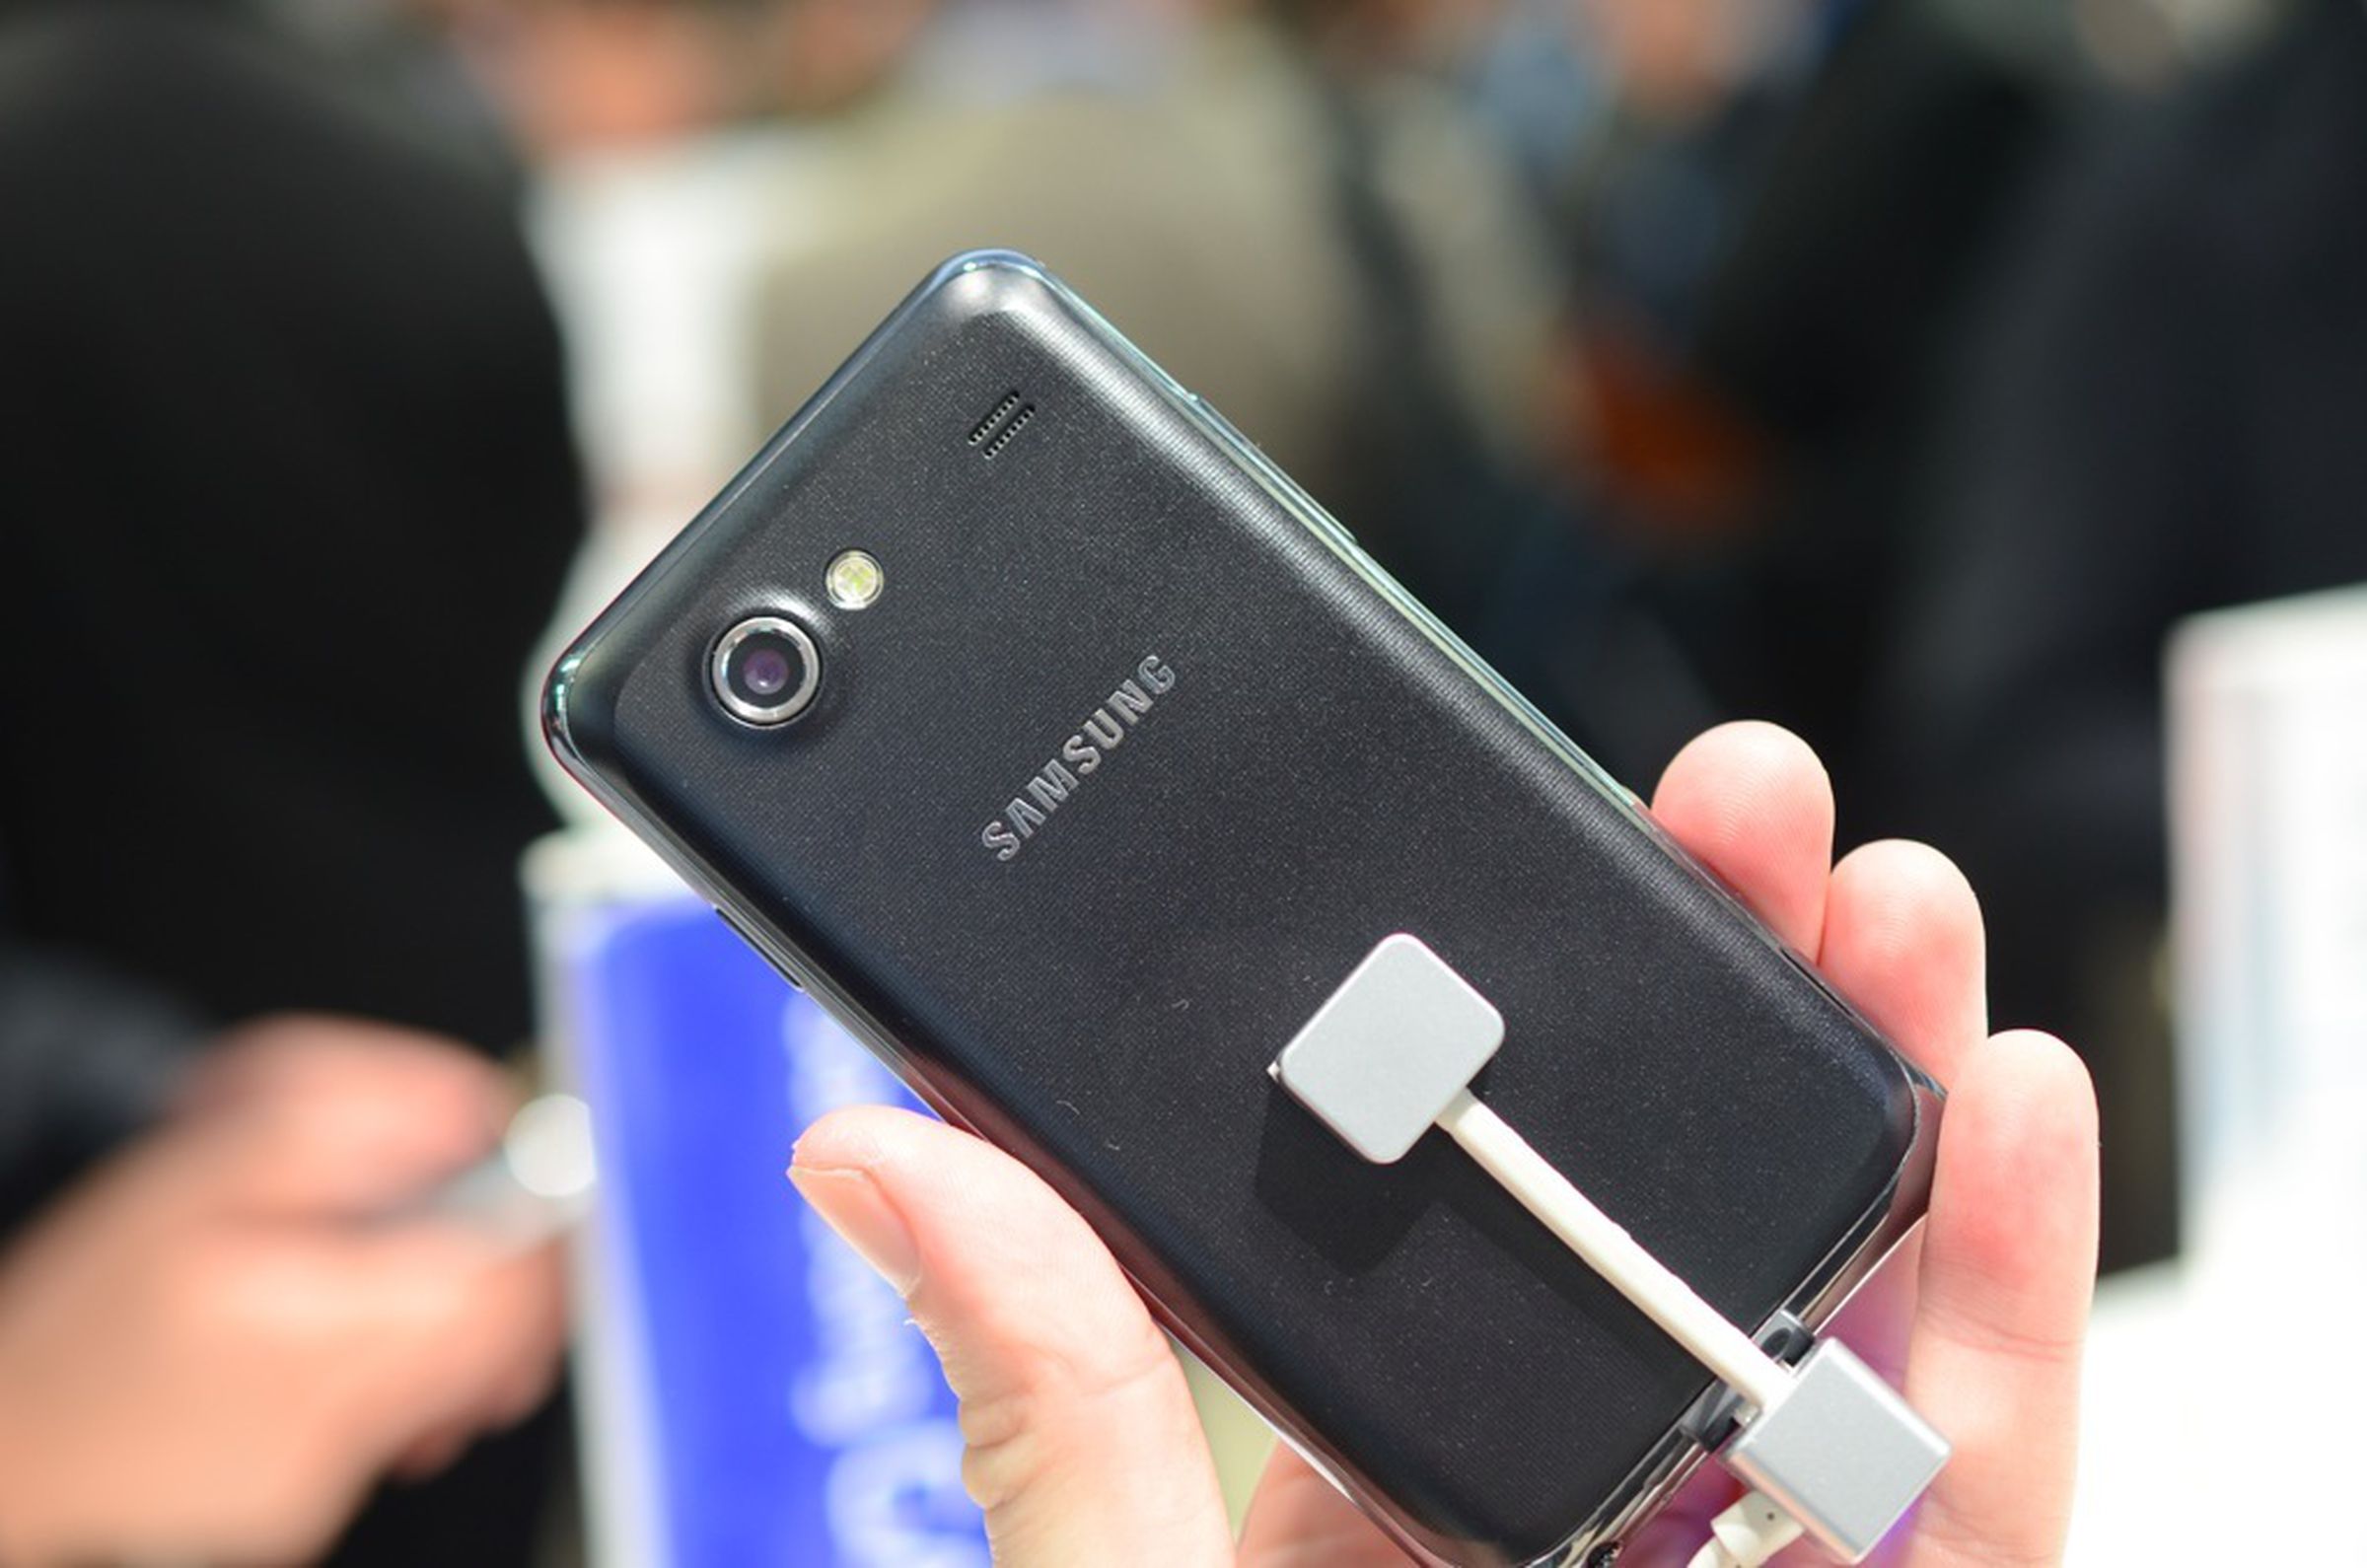 Samsung Galaxy S Advance hands-on photos